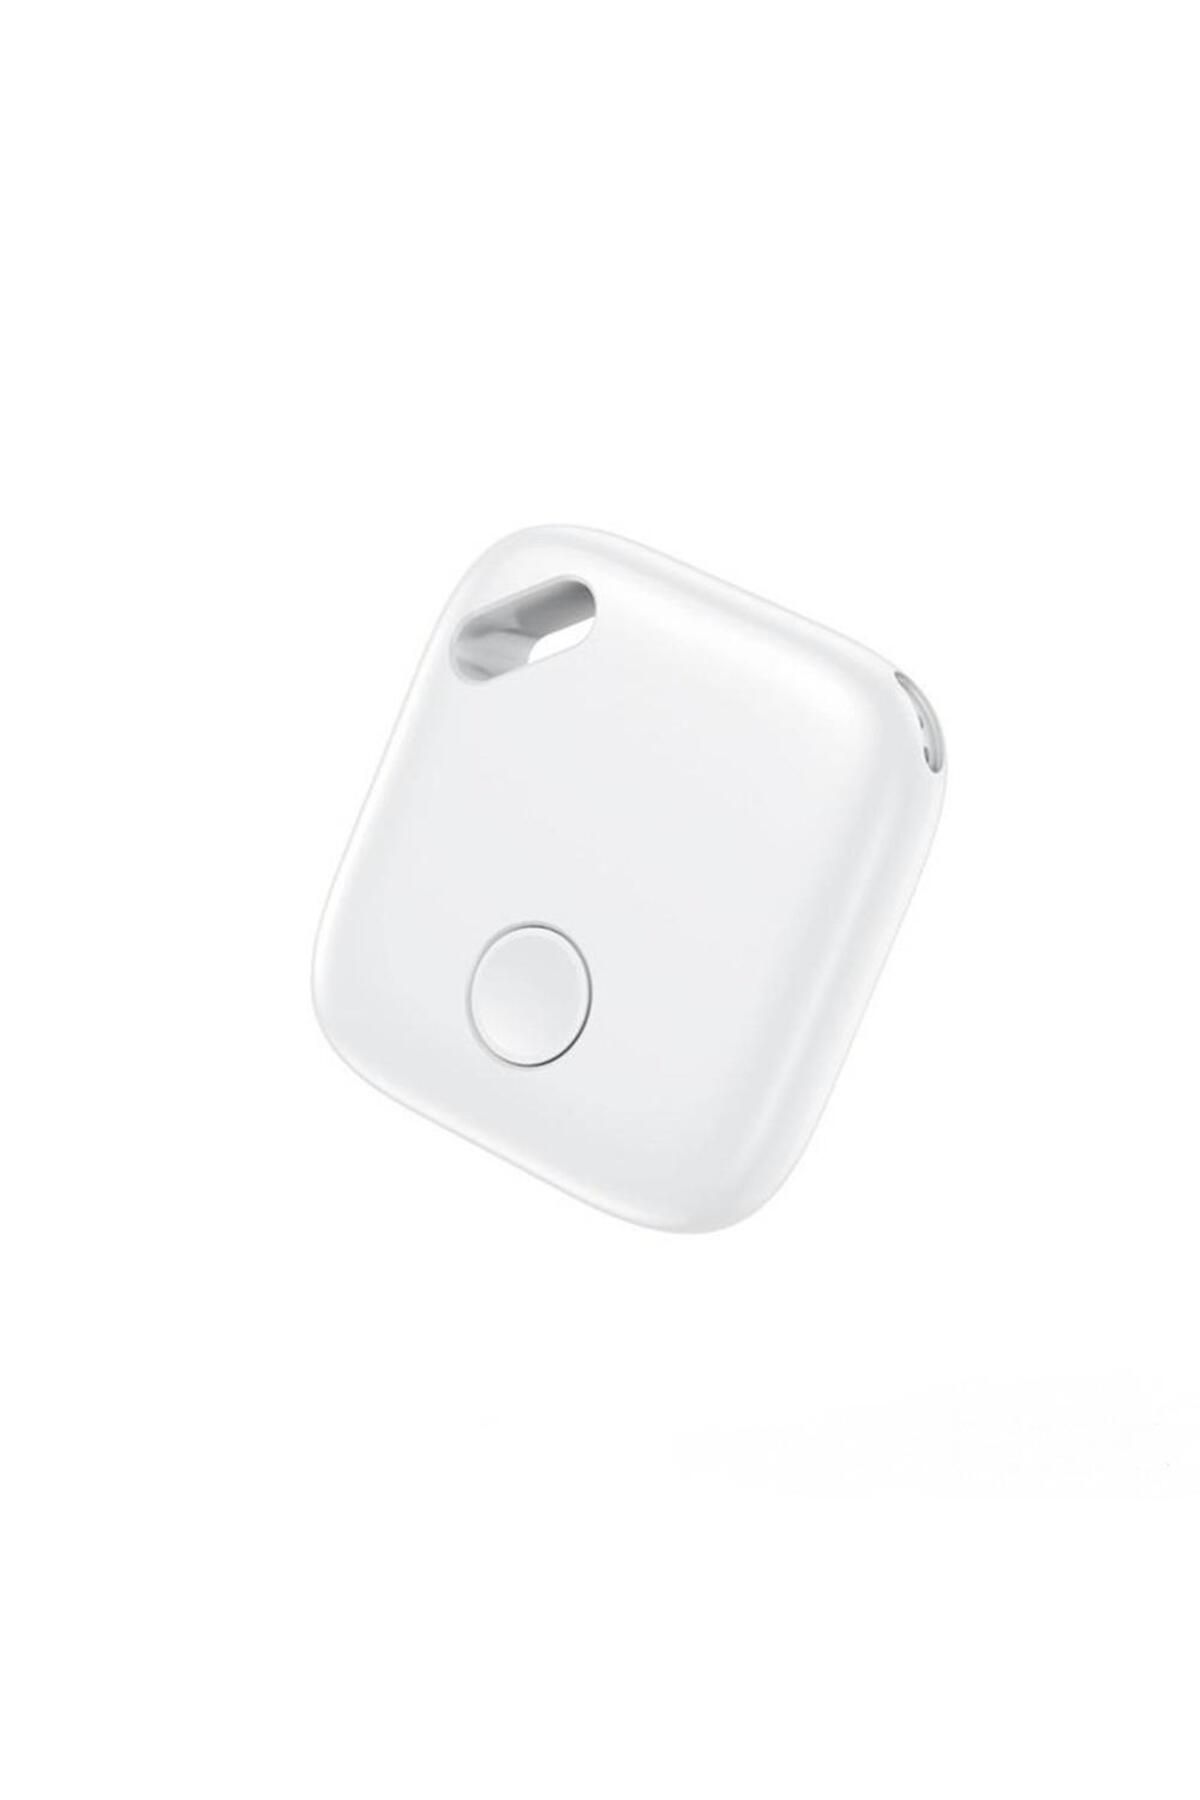 Global İTag Smart Tag Takip Cihazı Apple My Find Uyumlu Beyaz WNE0990